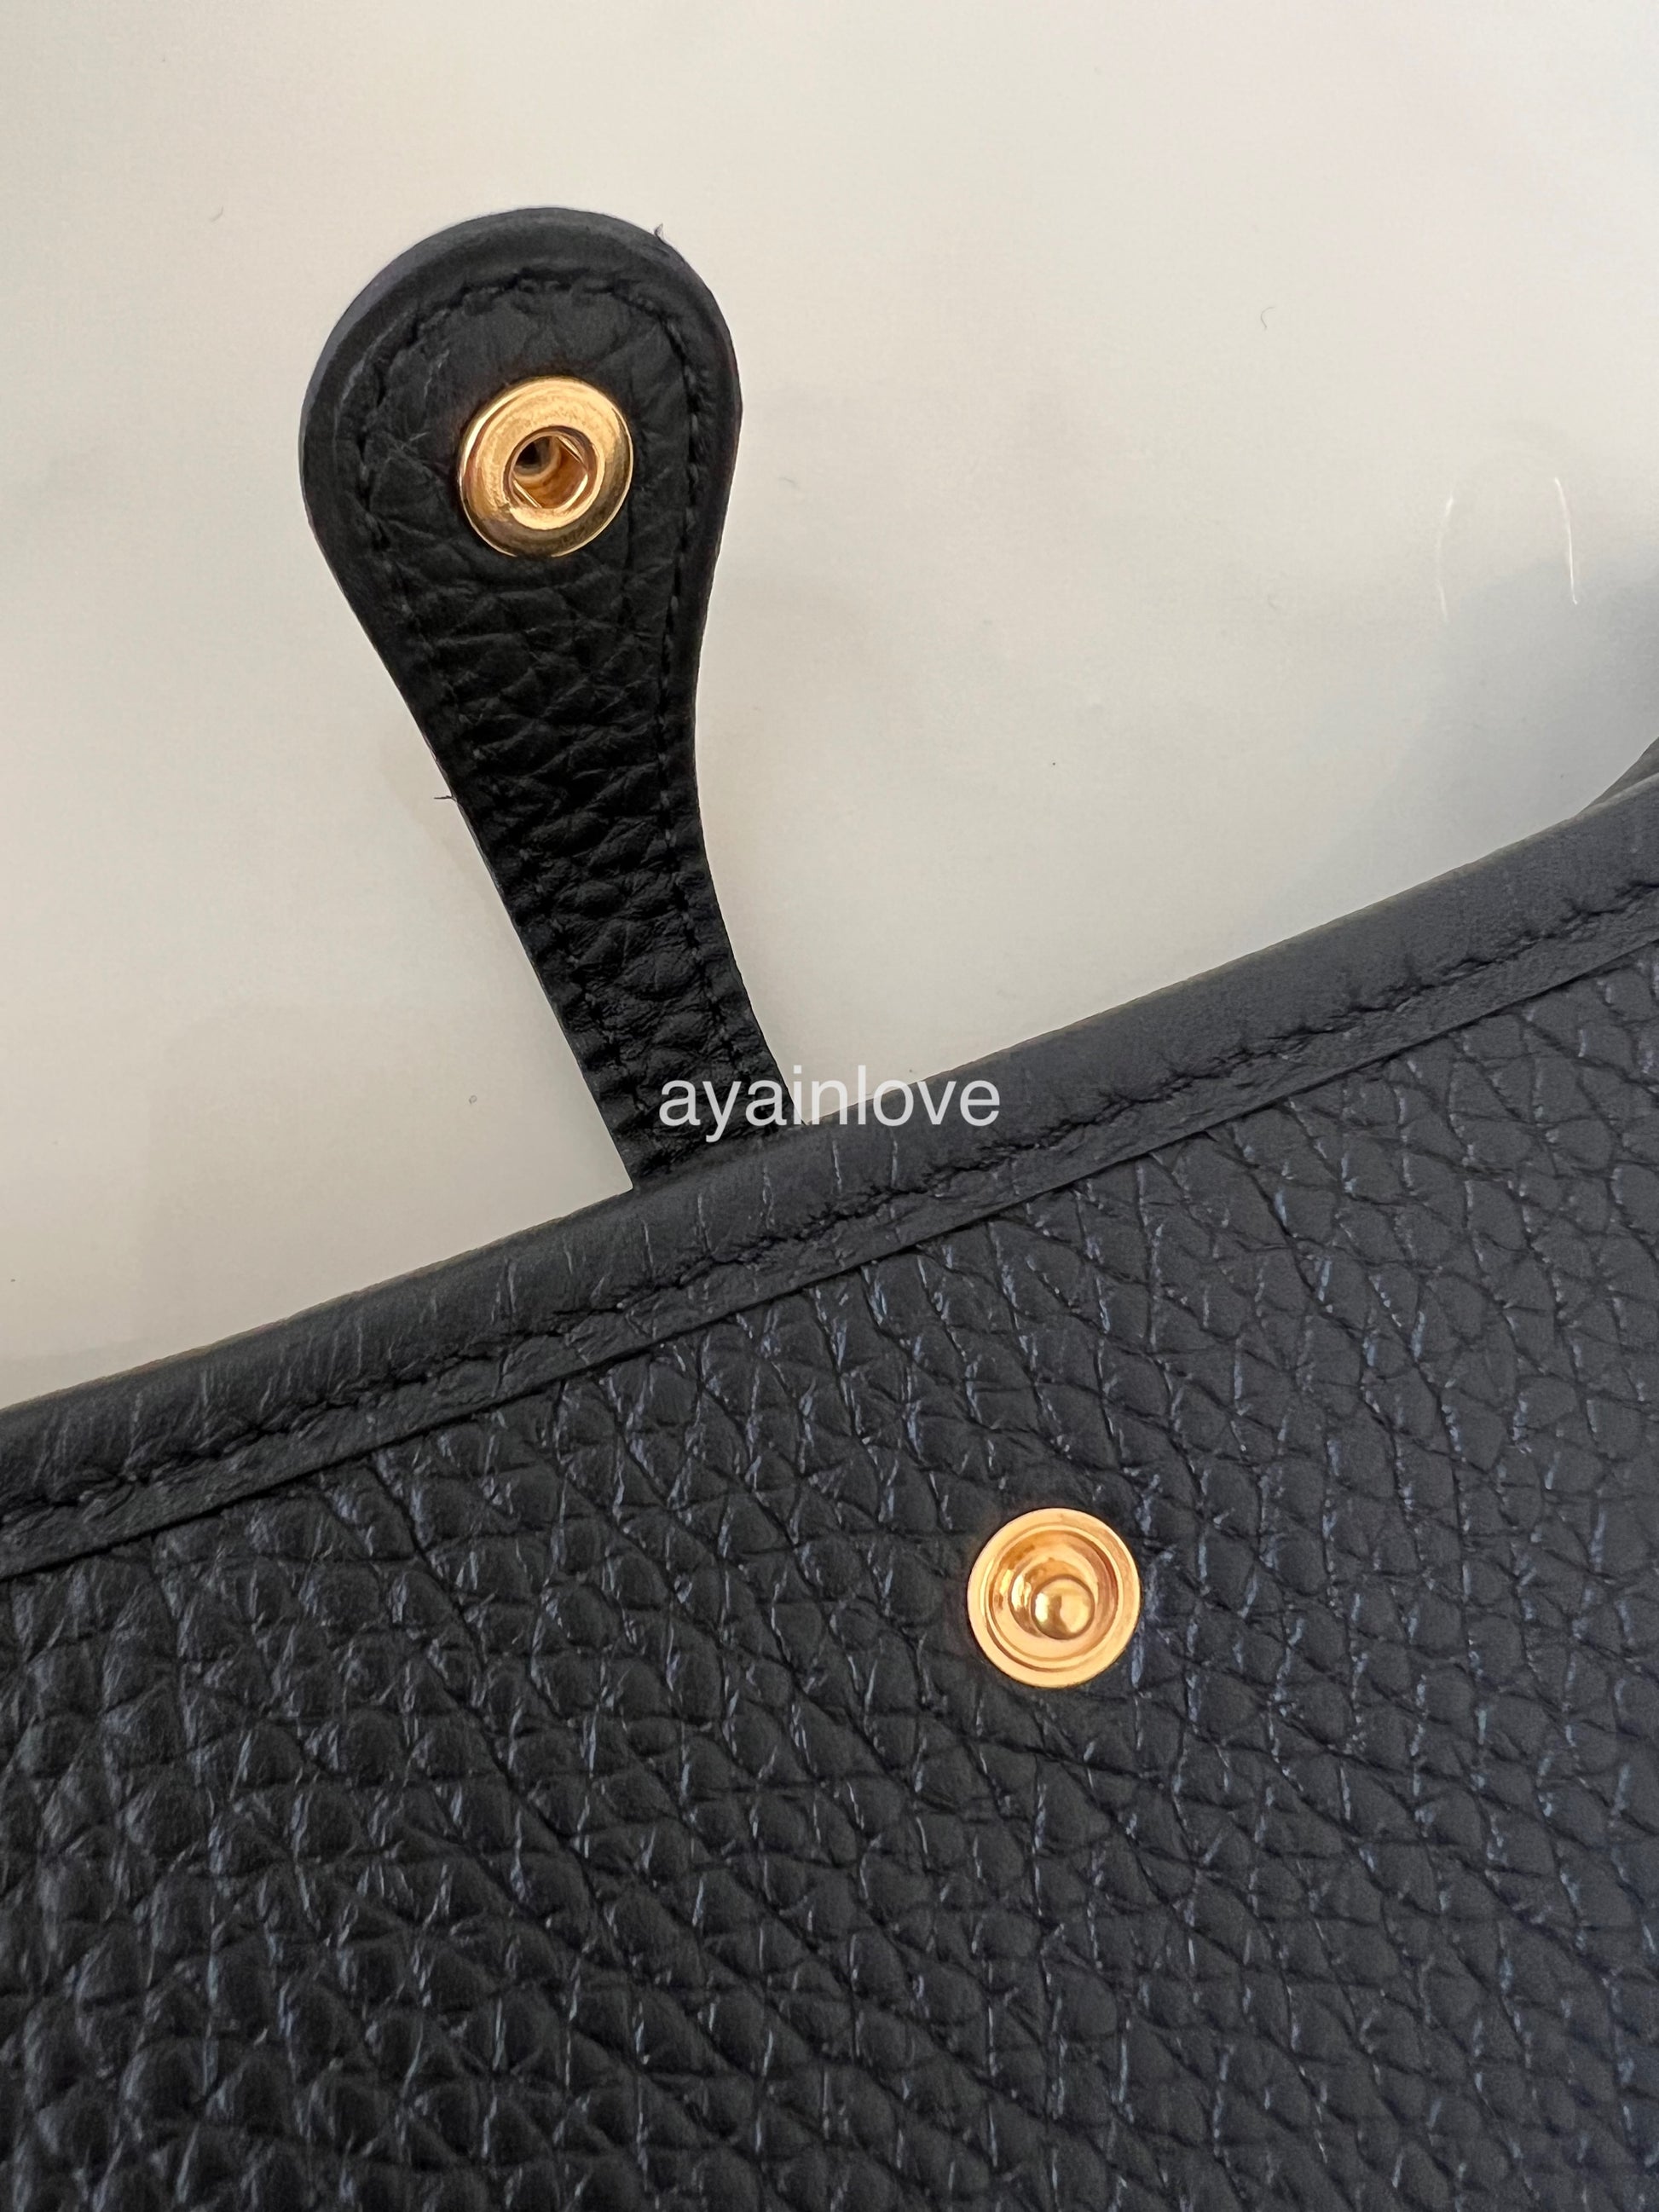 Hermès Mini Evelyne Black Gold - Designer WishBags